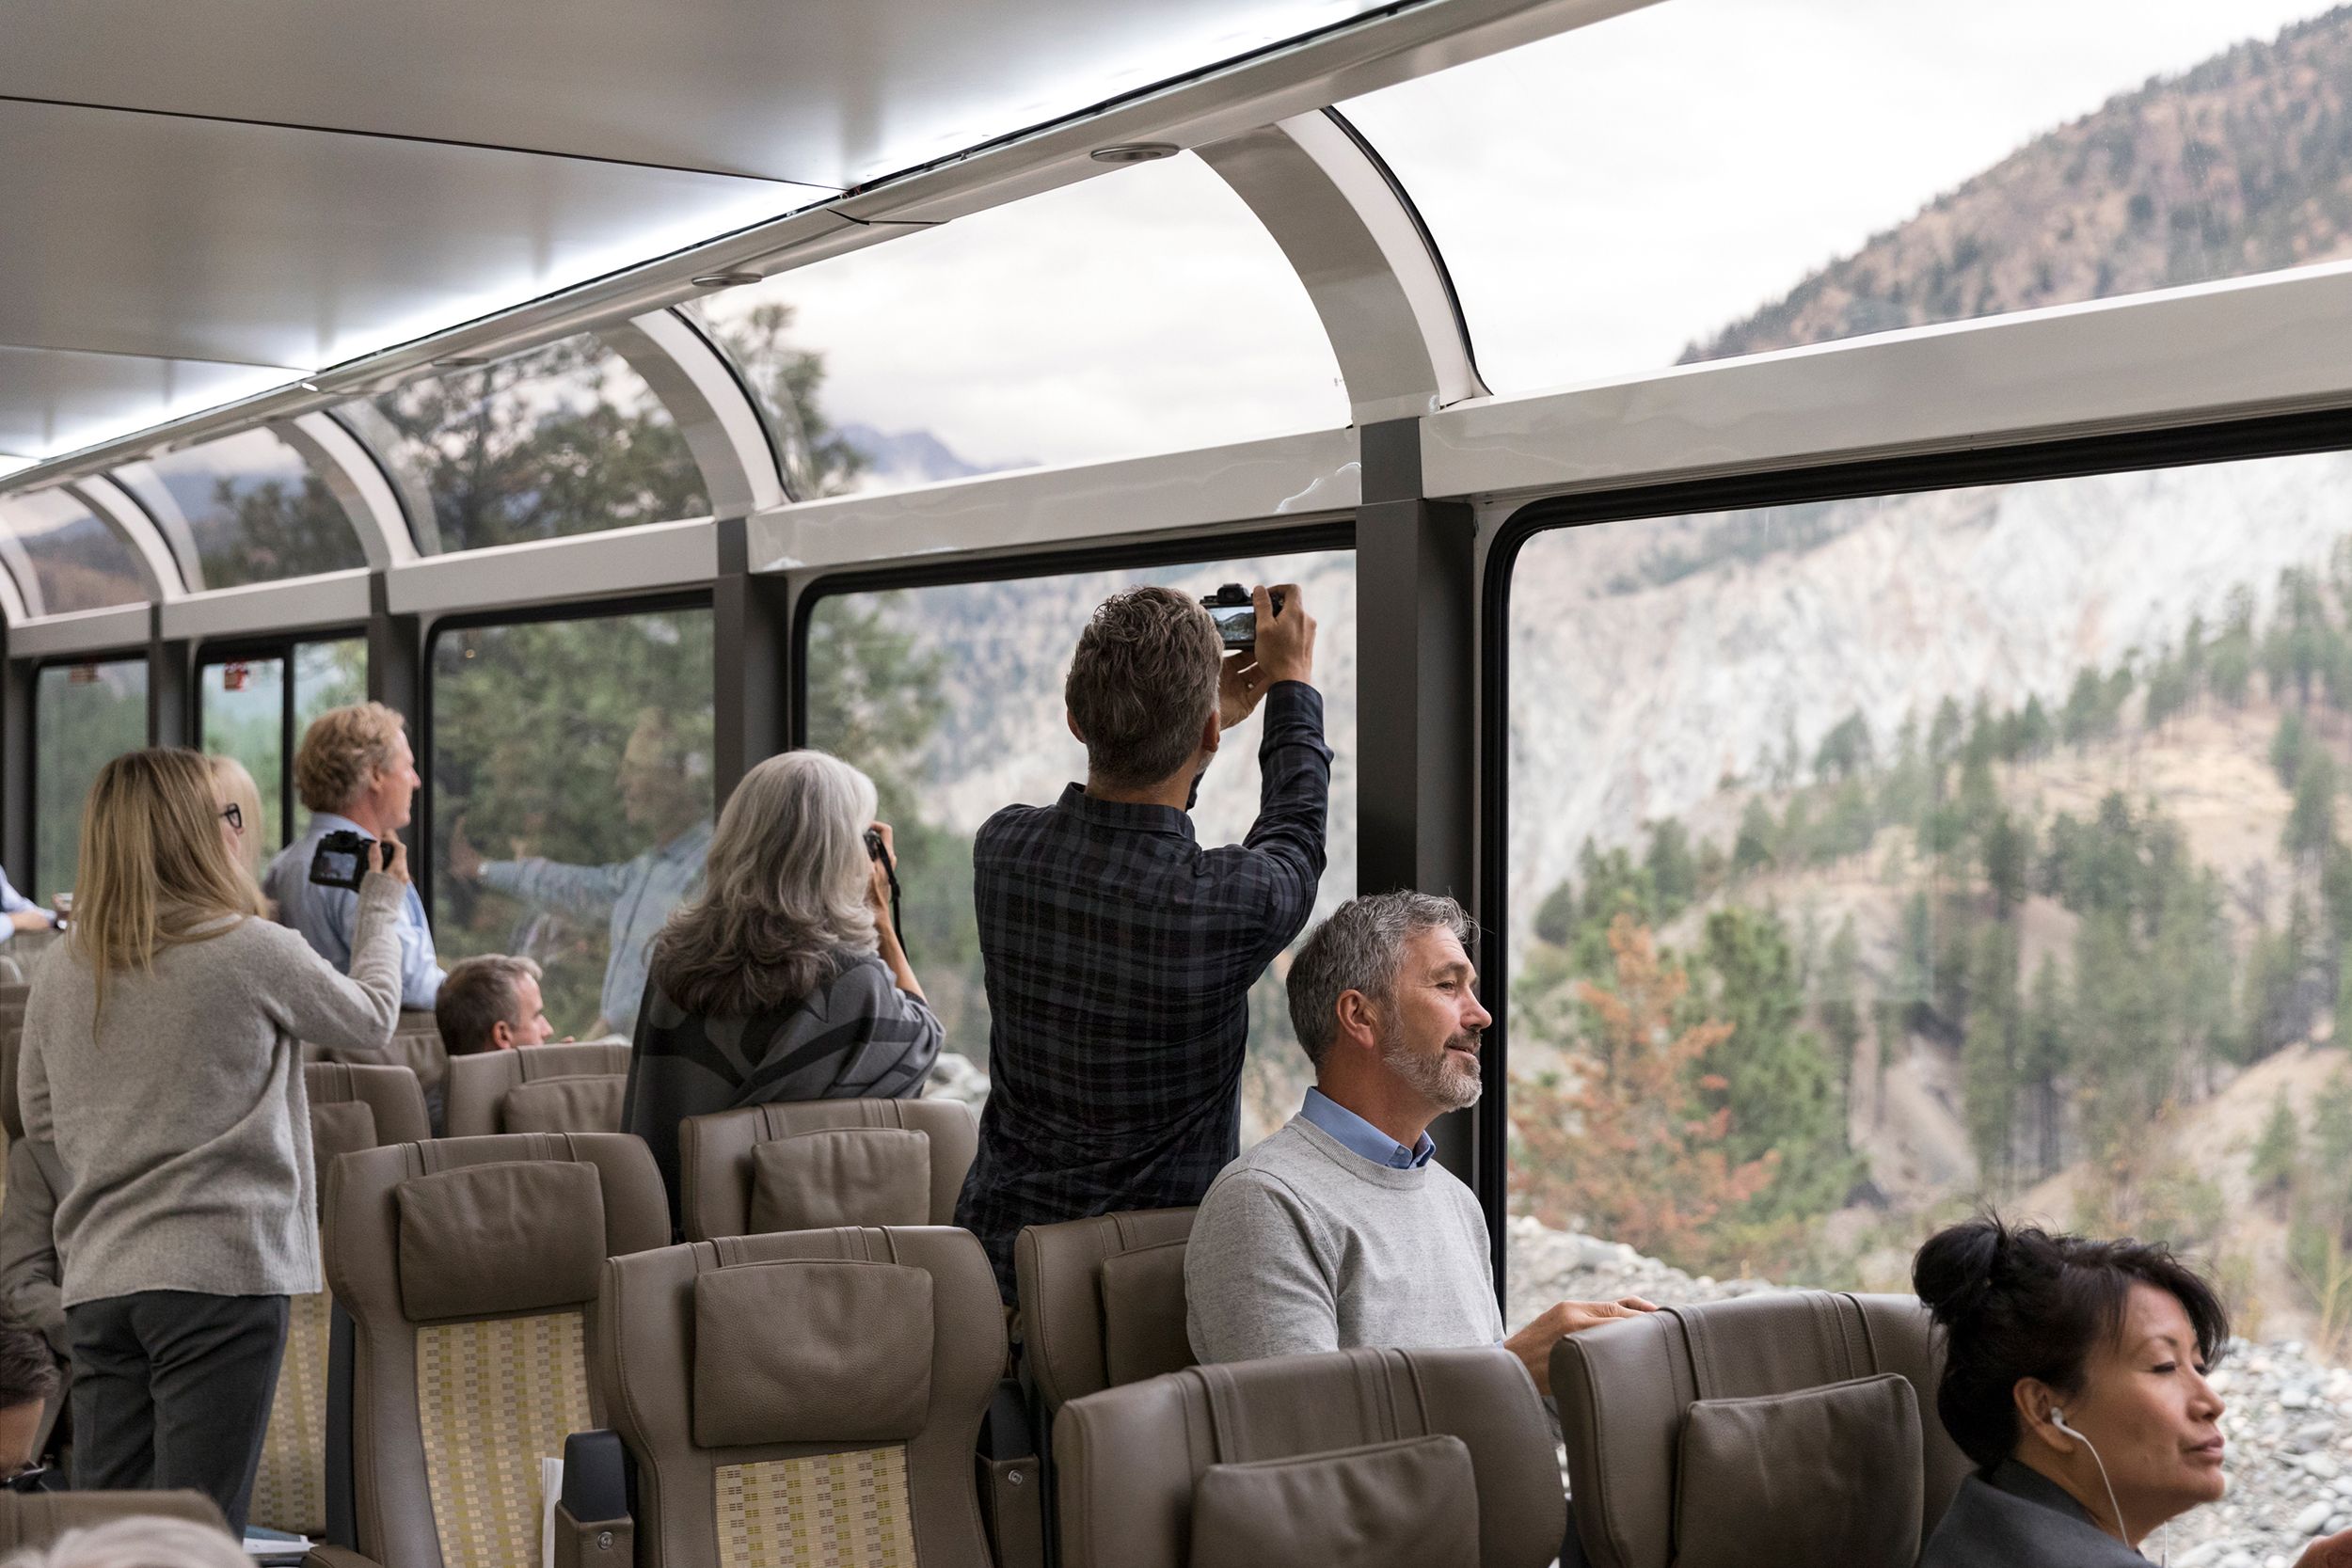 Ellers Bliver værre køretøj Rocky Mountaineer train has glass roof for the best rail views